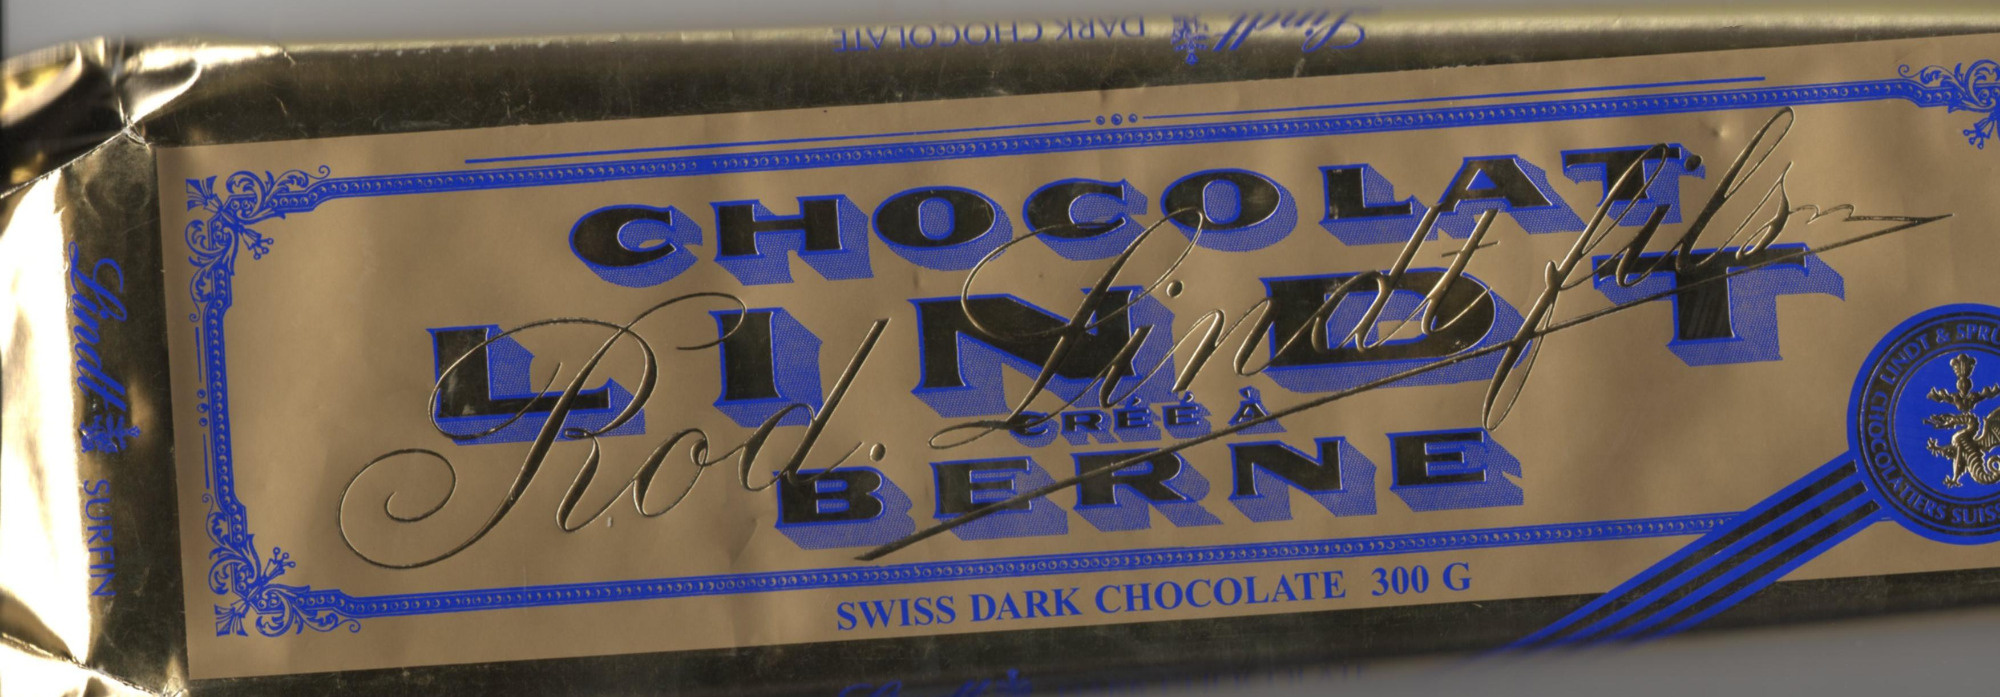 Chocolat Lindt - Product - fr